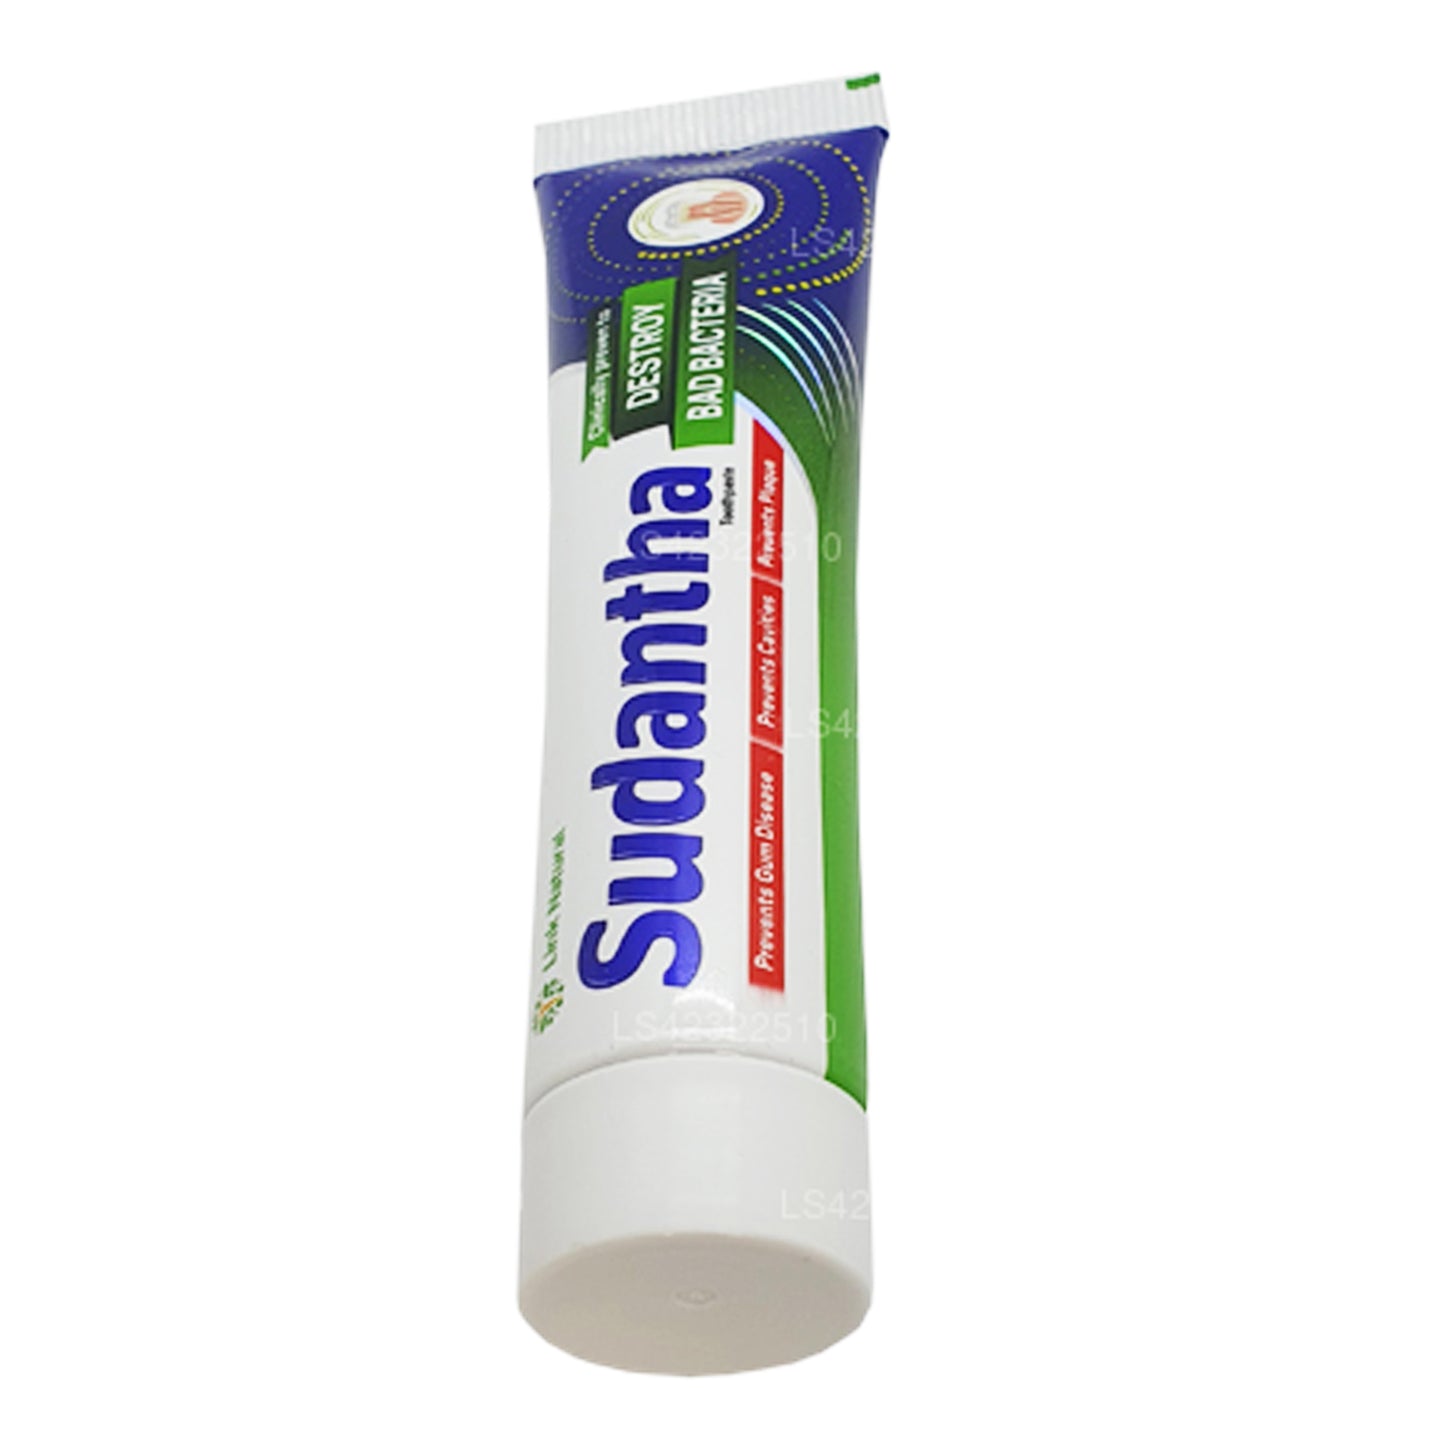 Link Sudantha Herbal Toothpaste